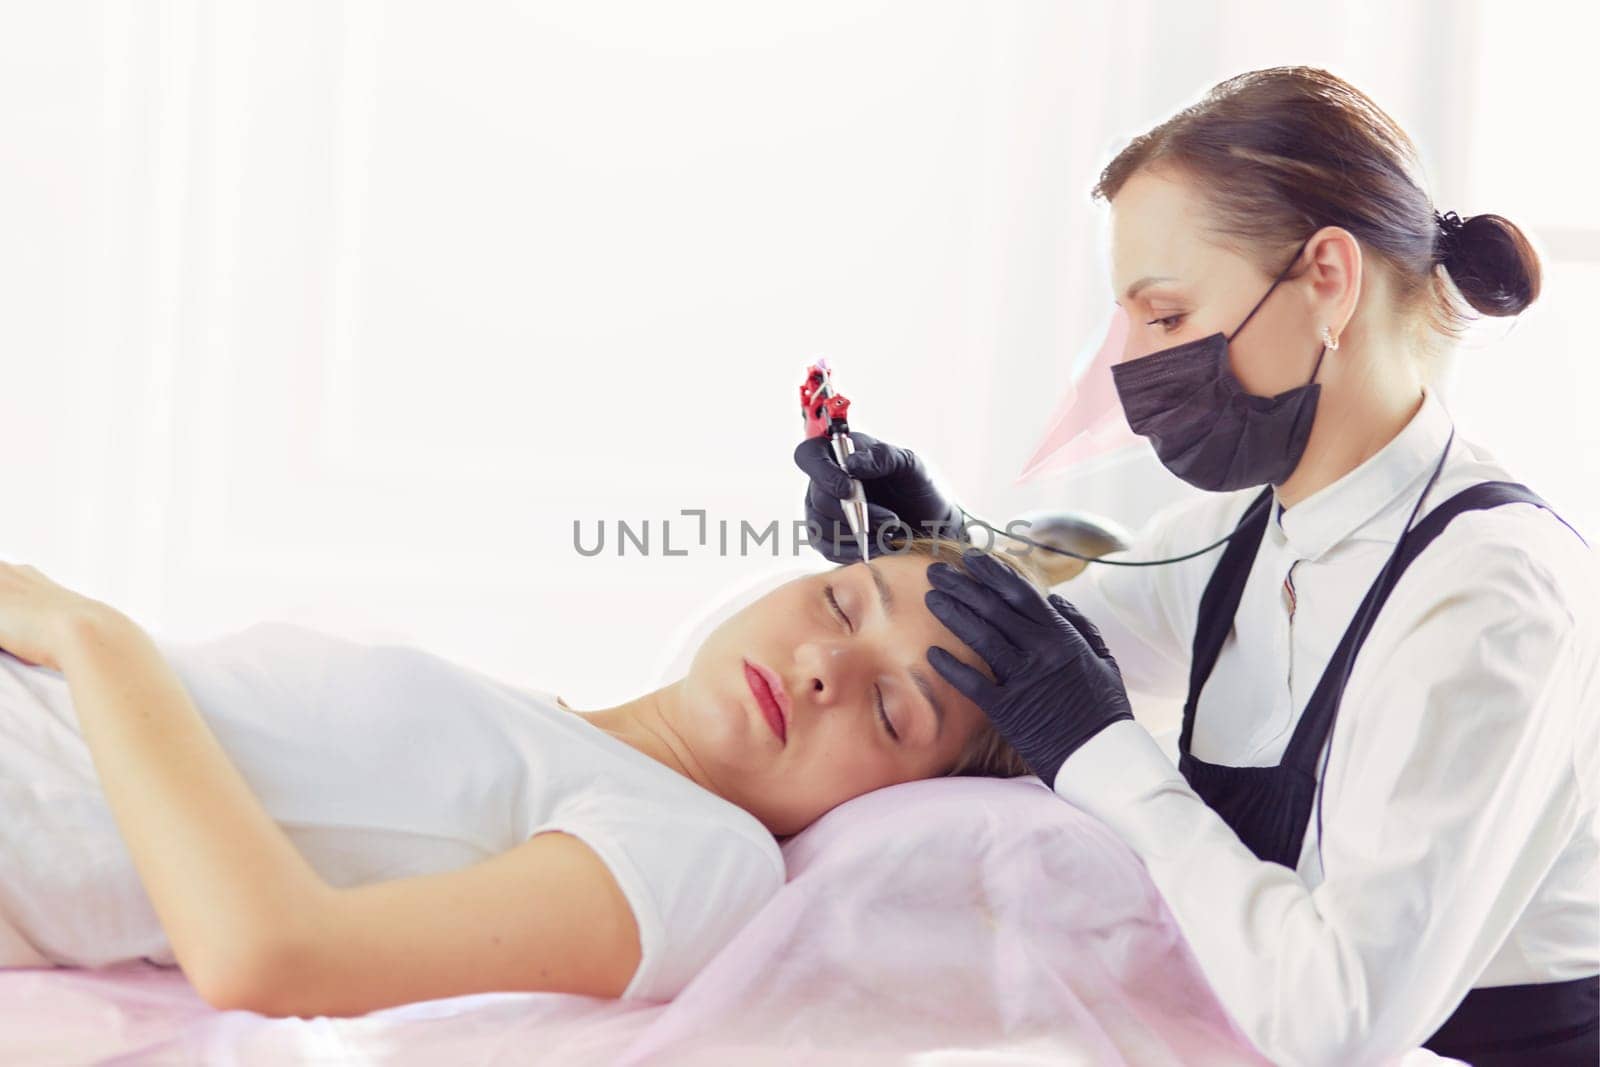 Young woman undergoing procedure of eyebrow permanent makeup in beauty salon.